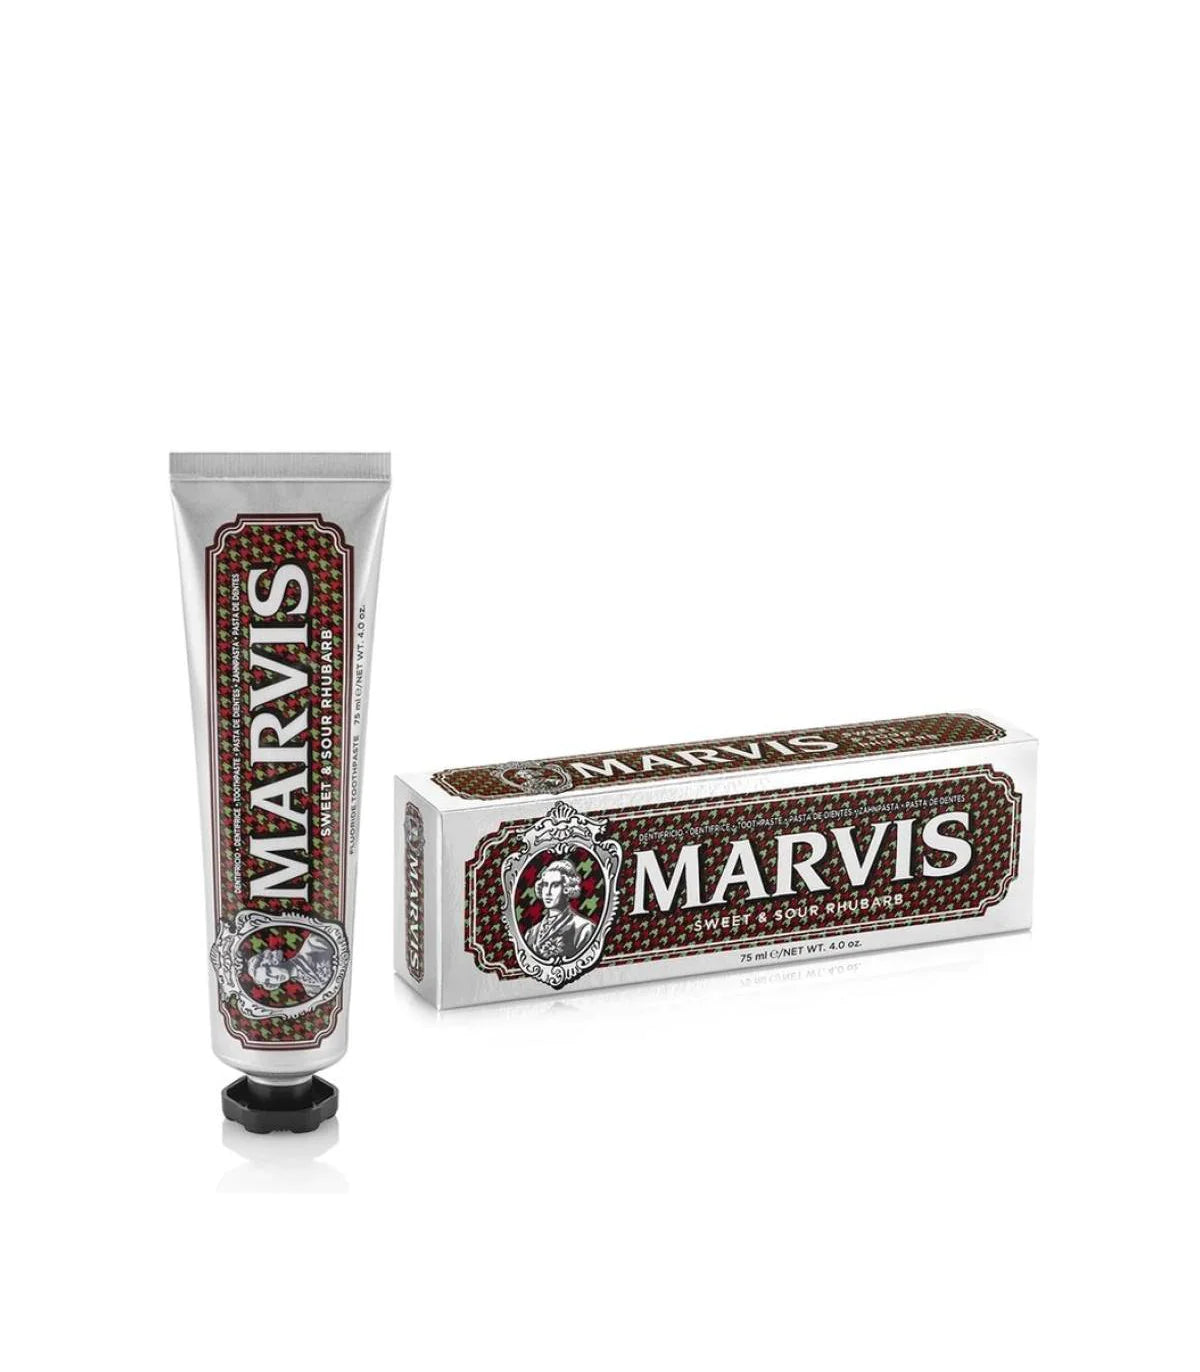 Marvis Sweet&Sour Rhubarb dentifricio 75ml